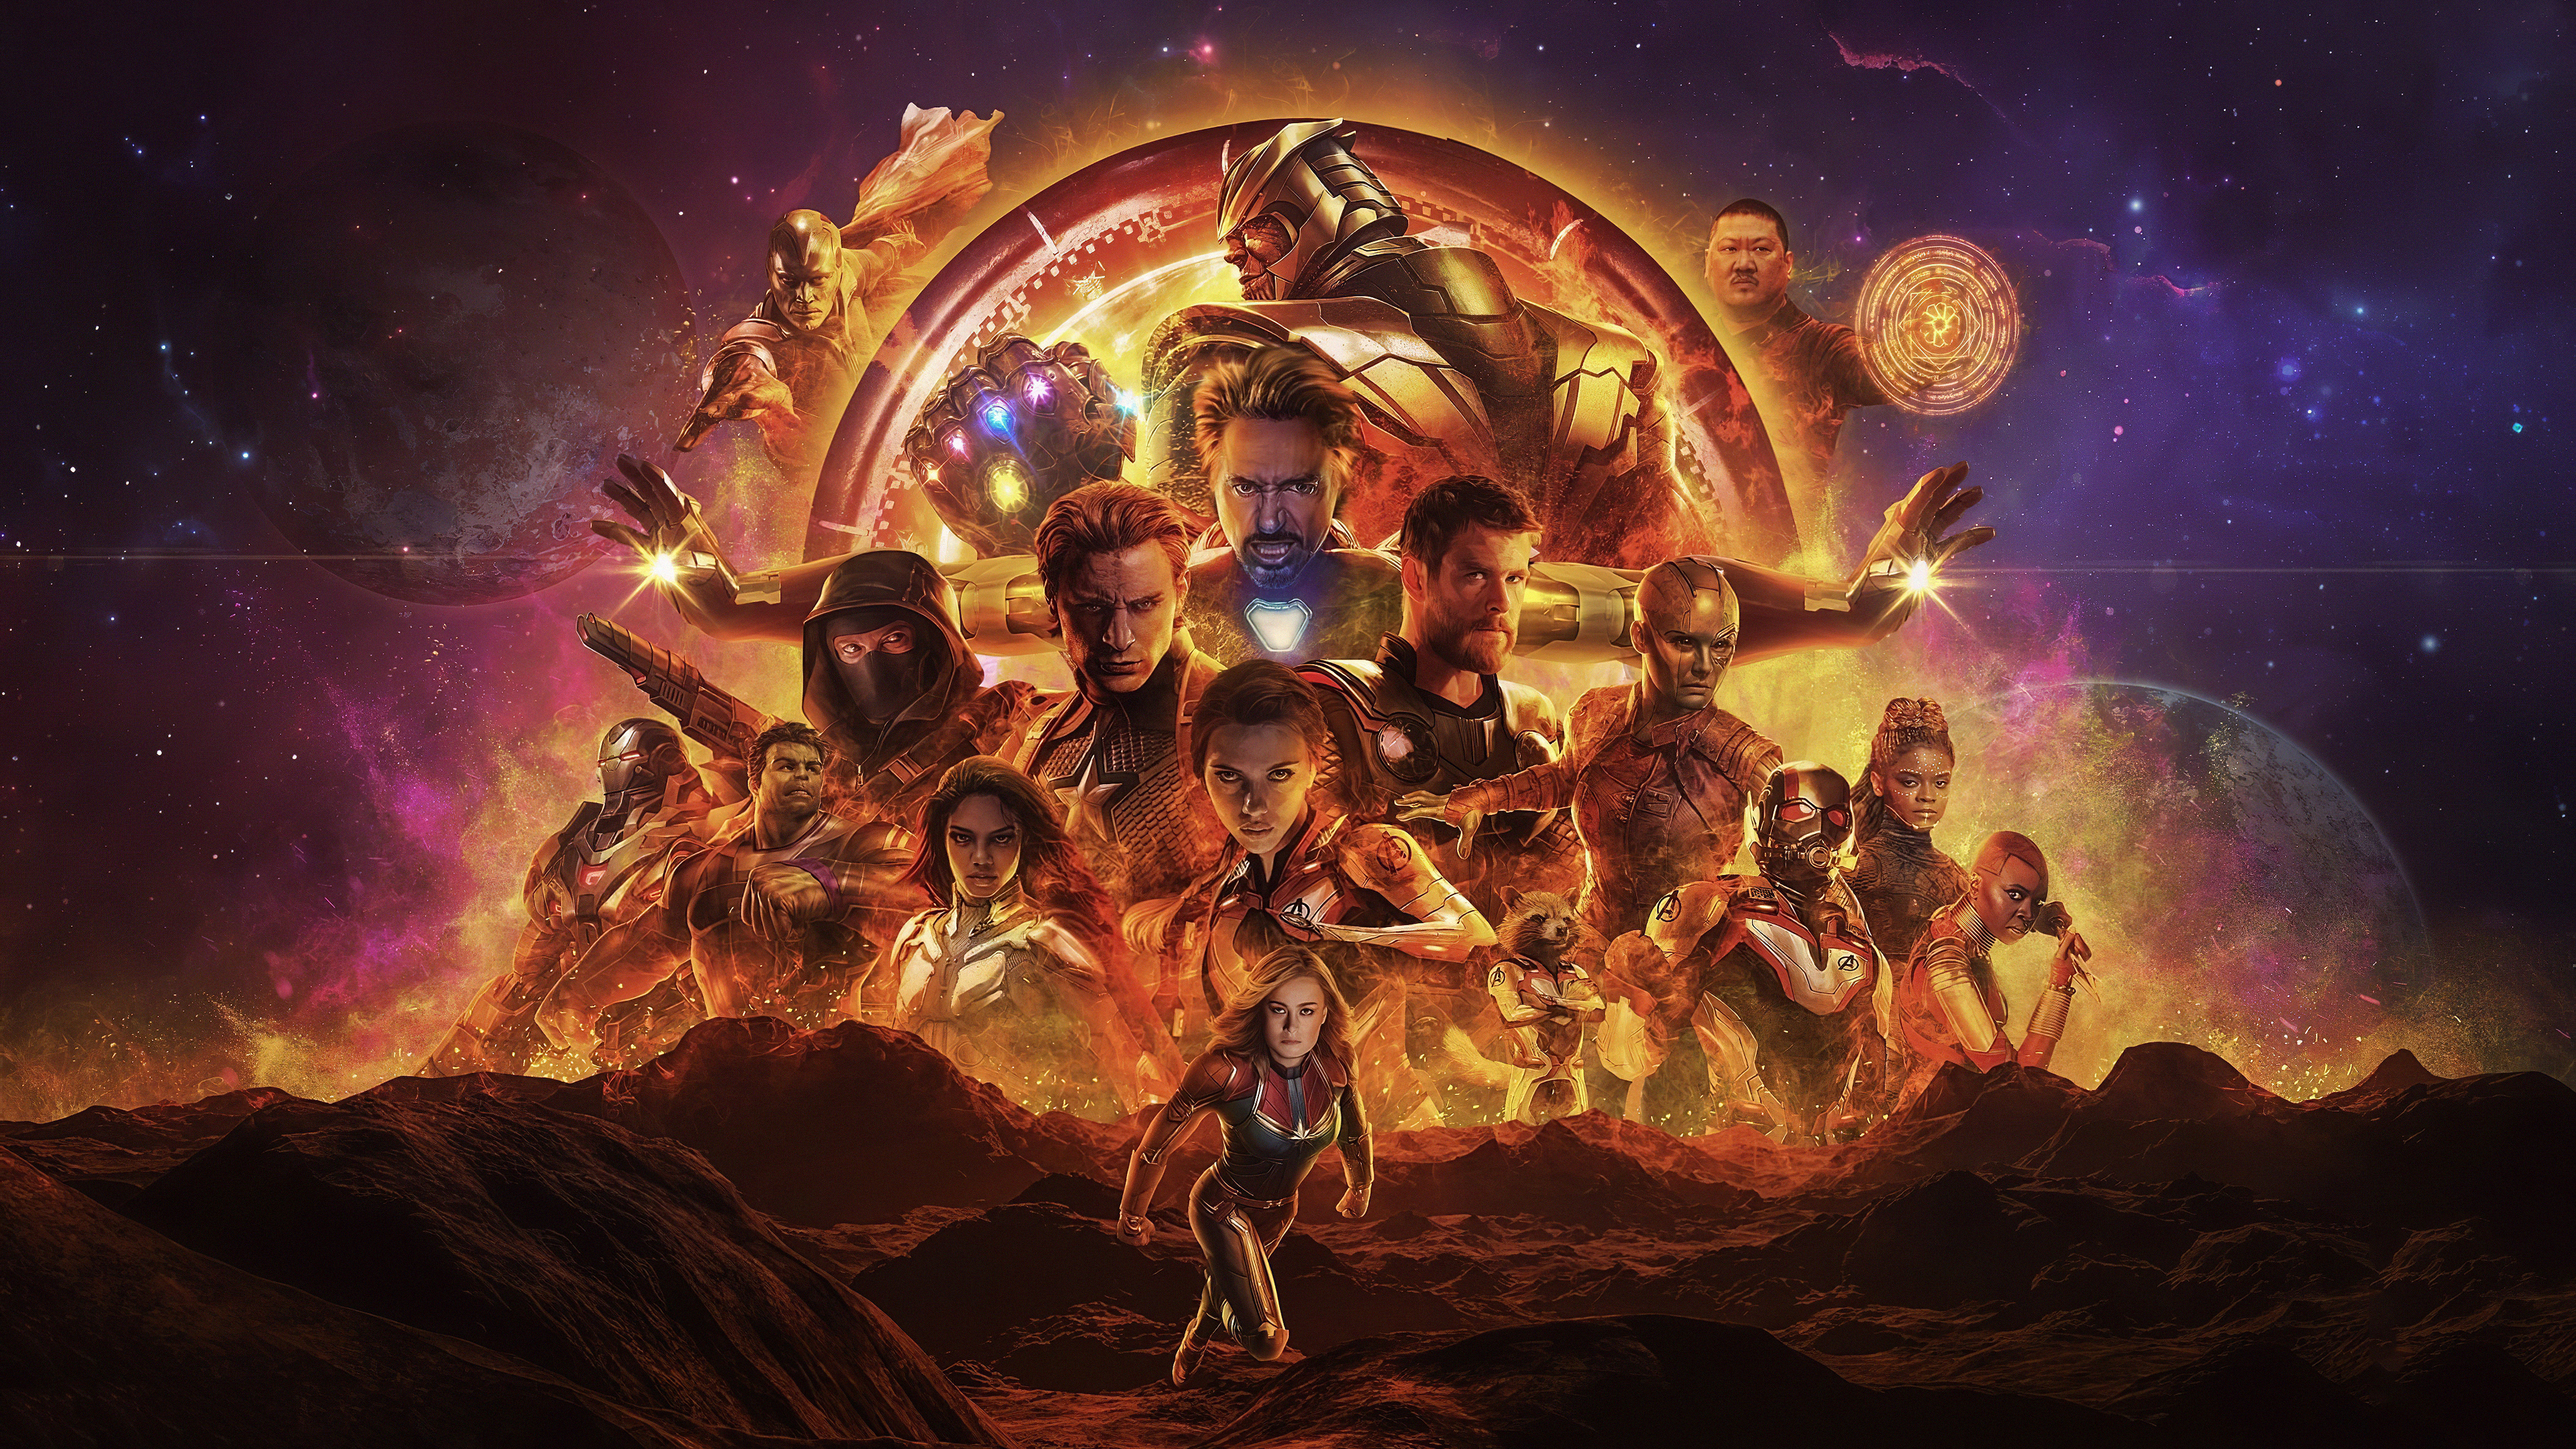 Avengers Endgame Poster Image Wallpapers.